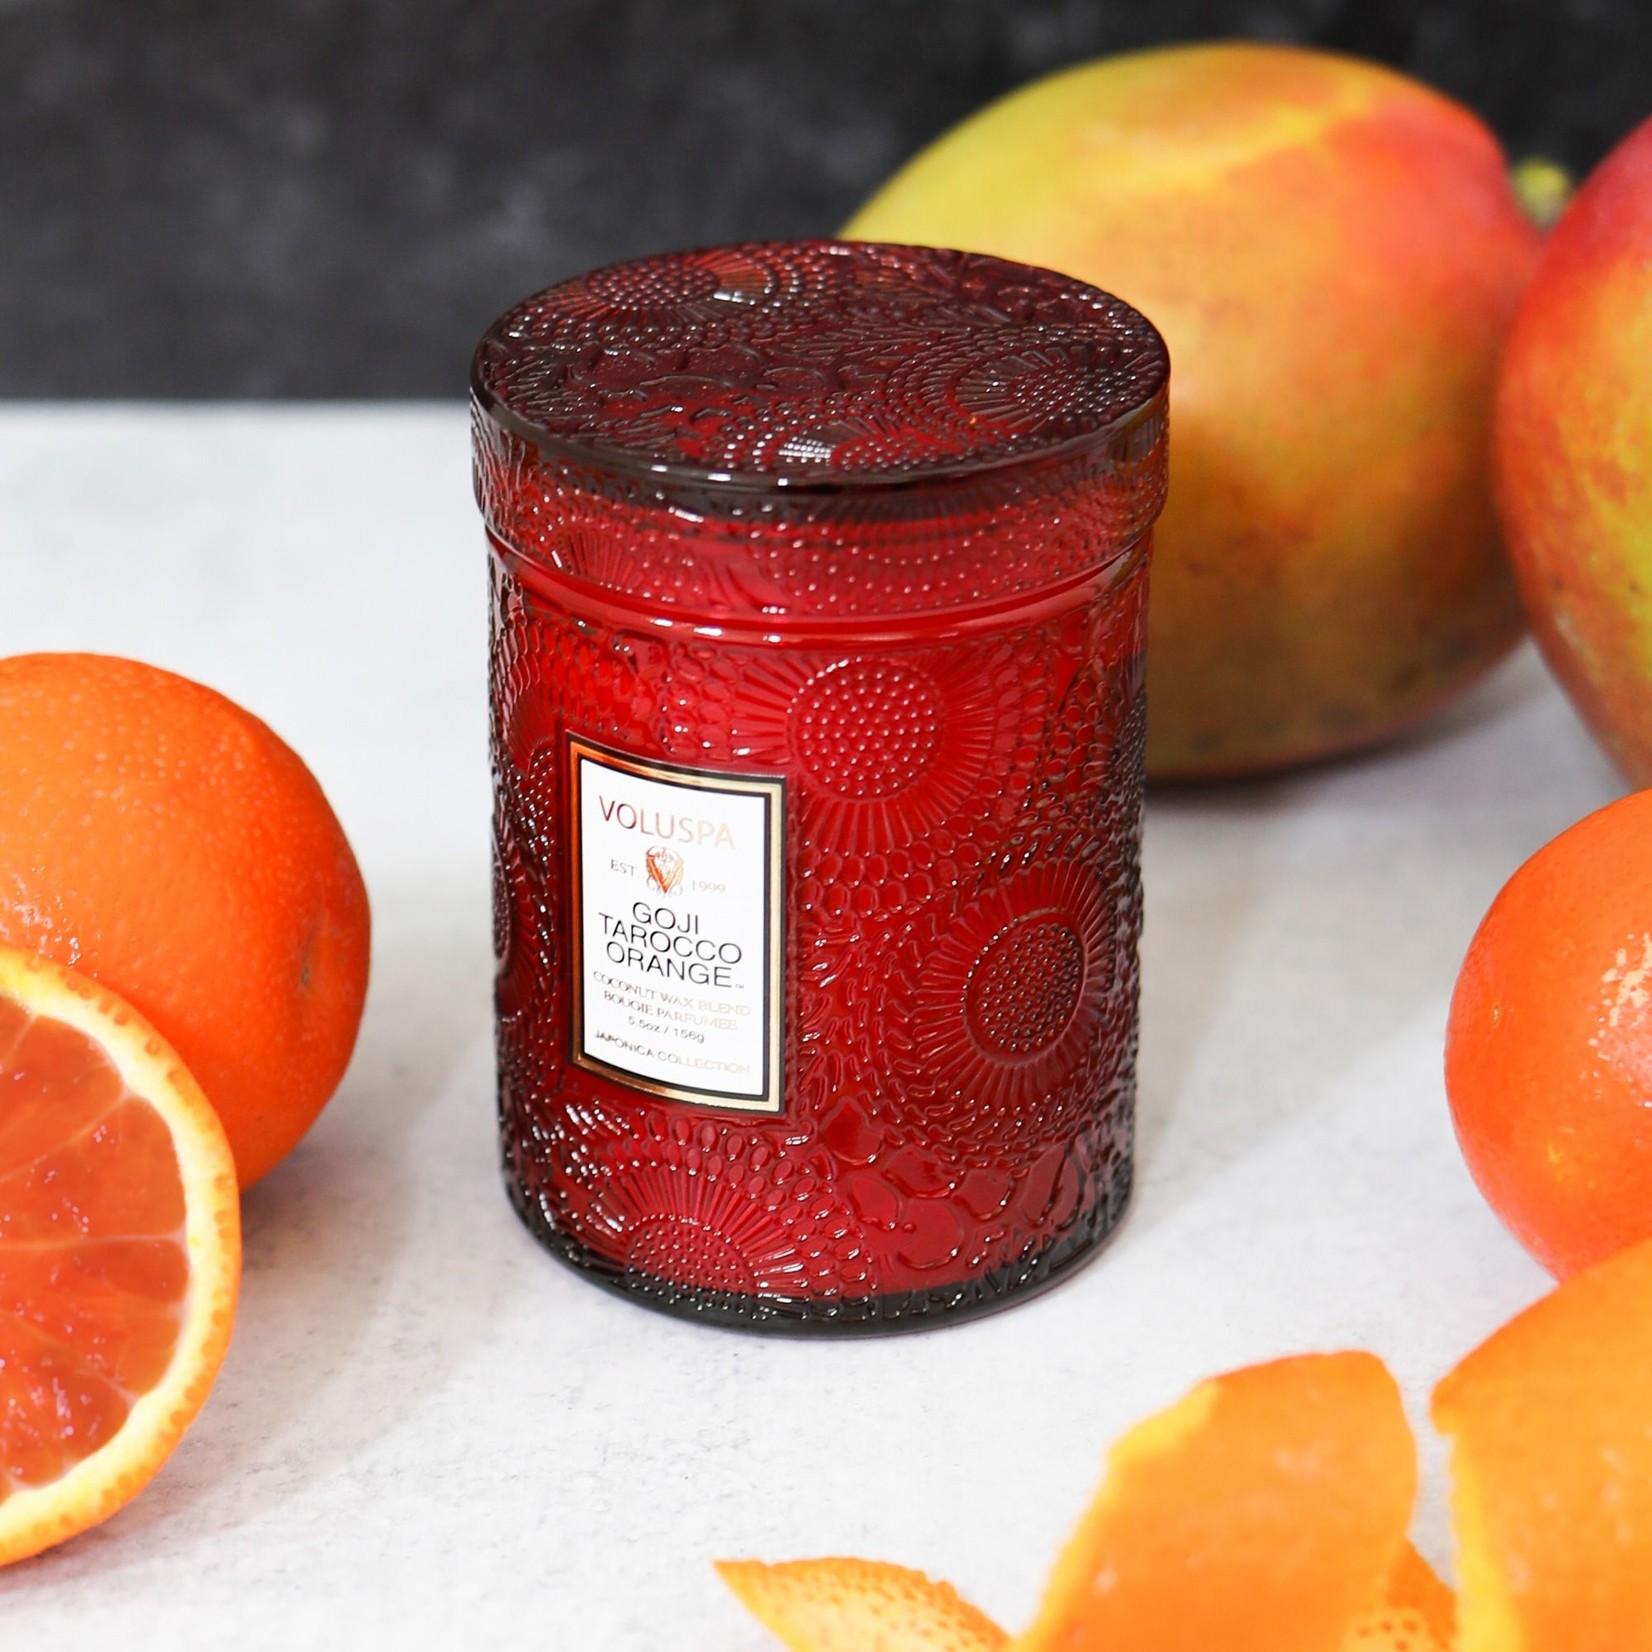 Voluspa Goji & Tarocco Orange Small Jar Candle